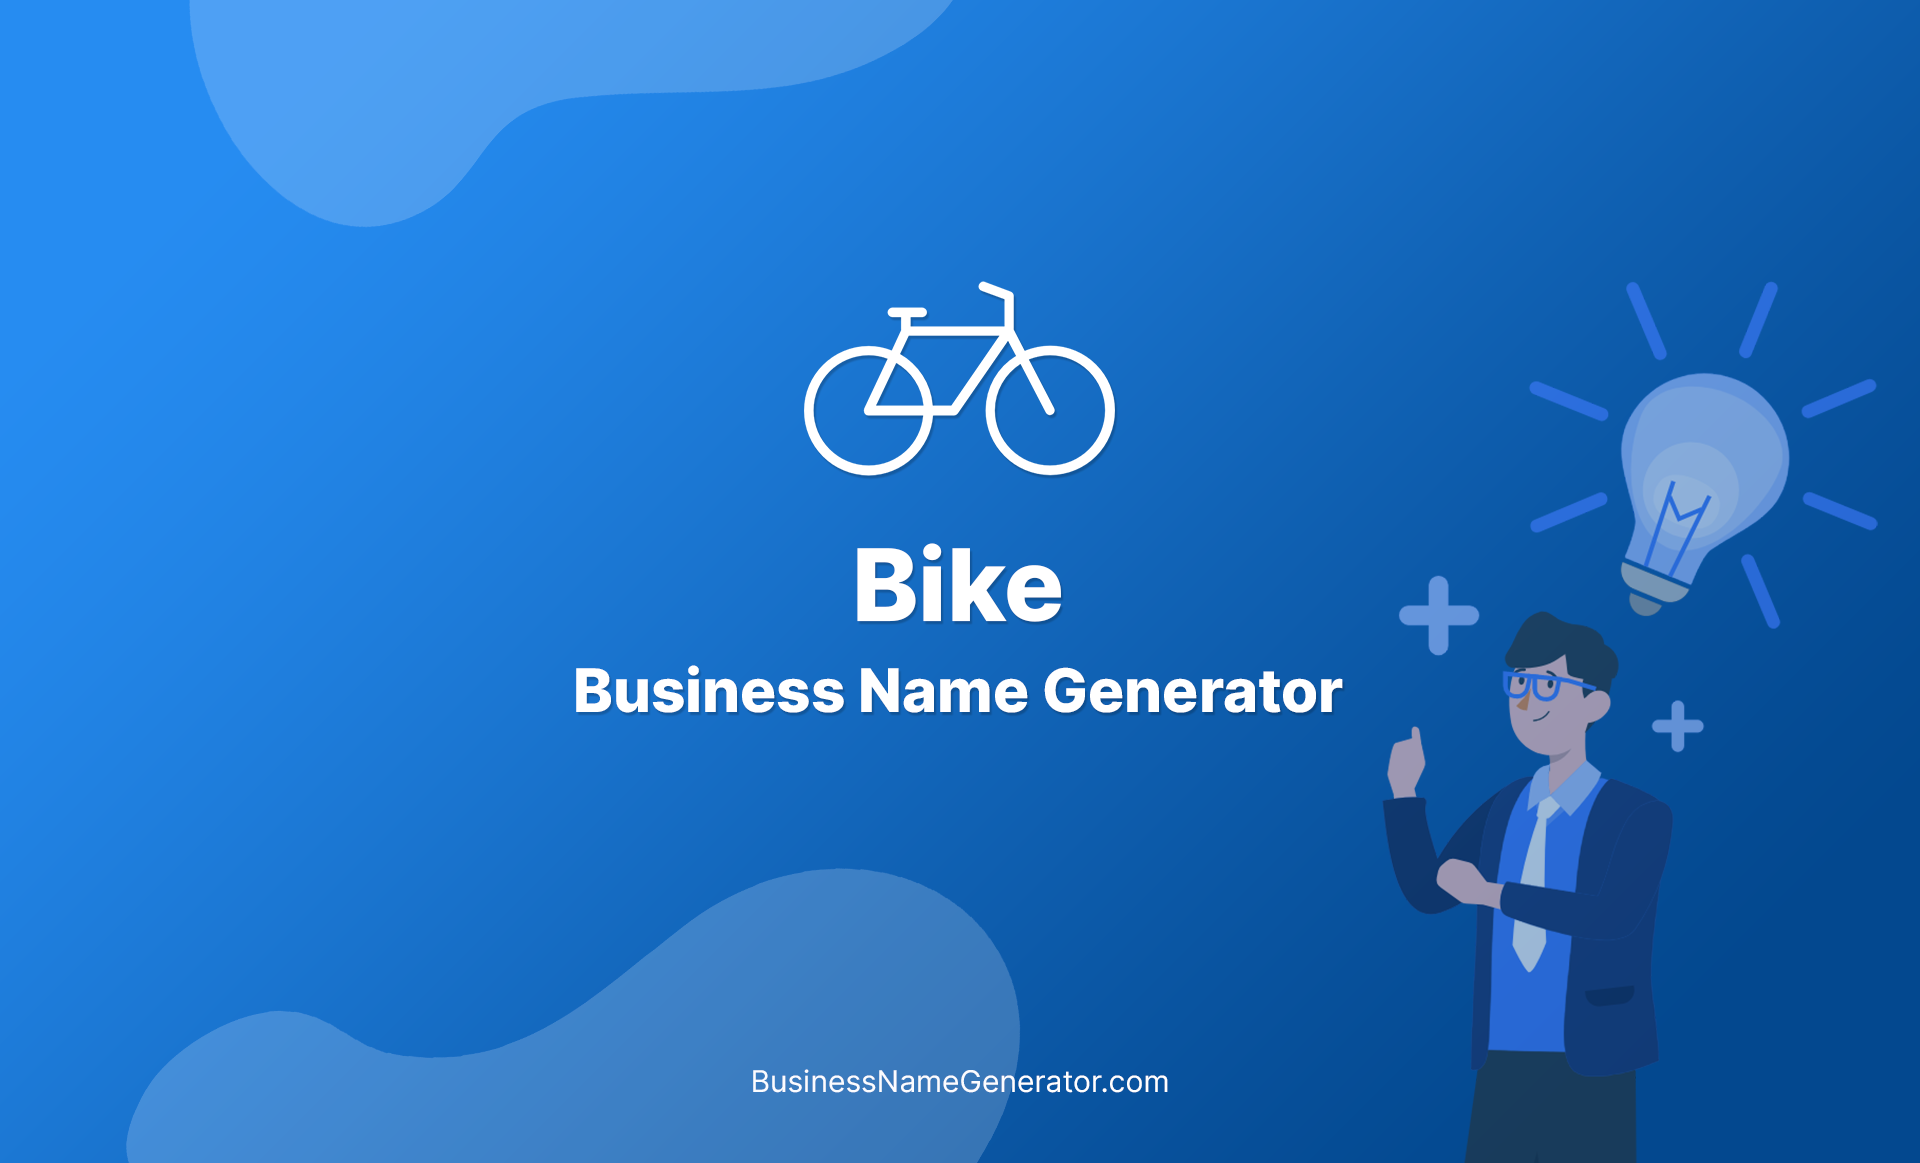 Bike Business Name Generator